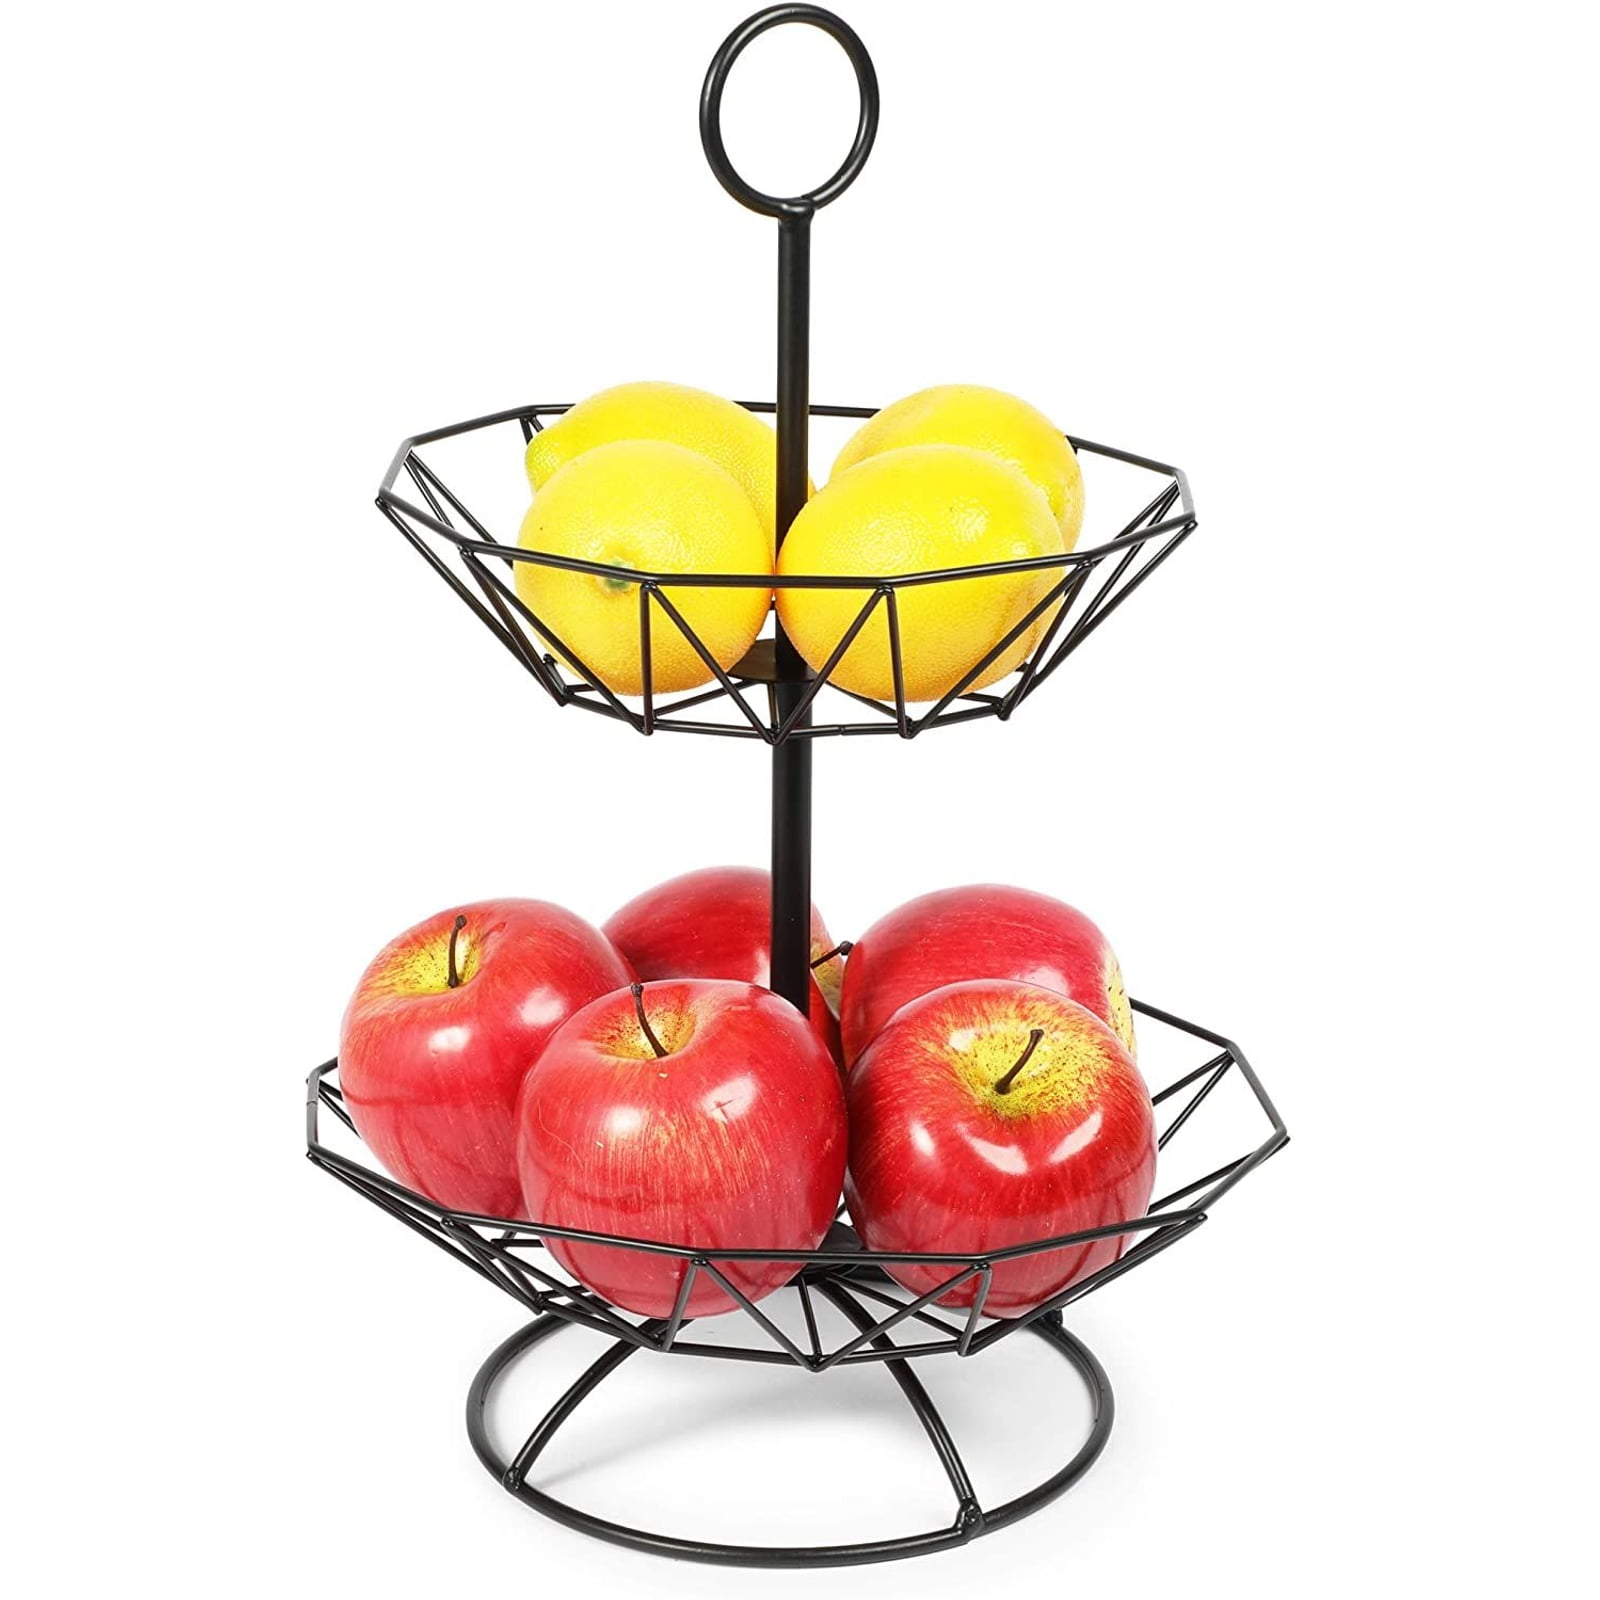 Eco friendly basket for fruit-Home dining room decor-Wicker basket-Basket for table-Round mini basket-Mom gift-House warming gift-Fruit bowl